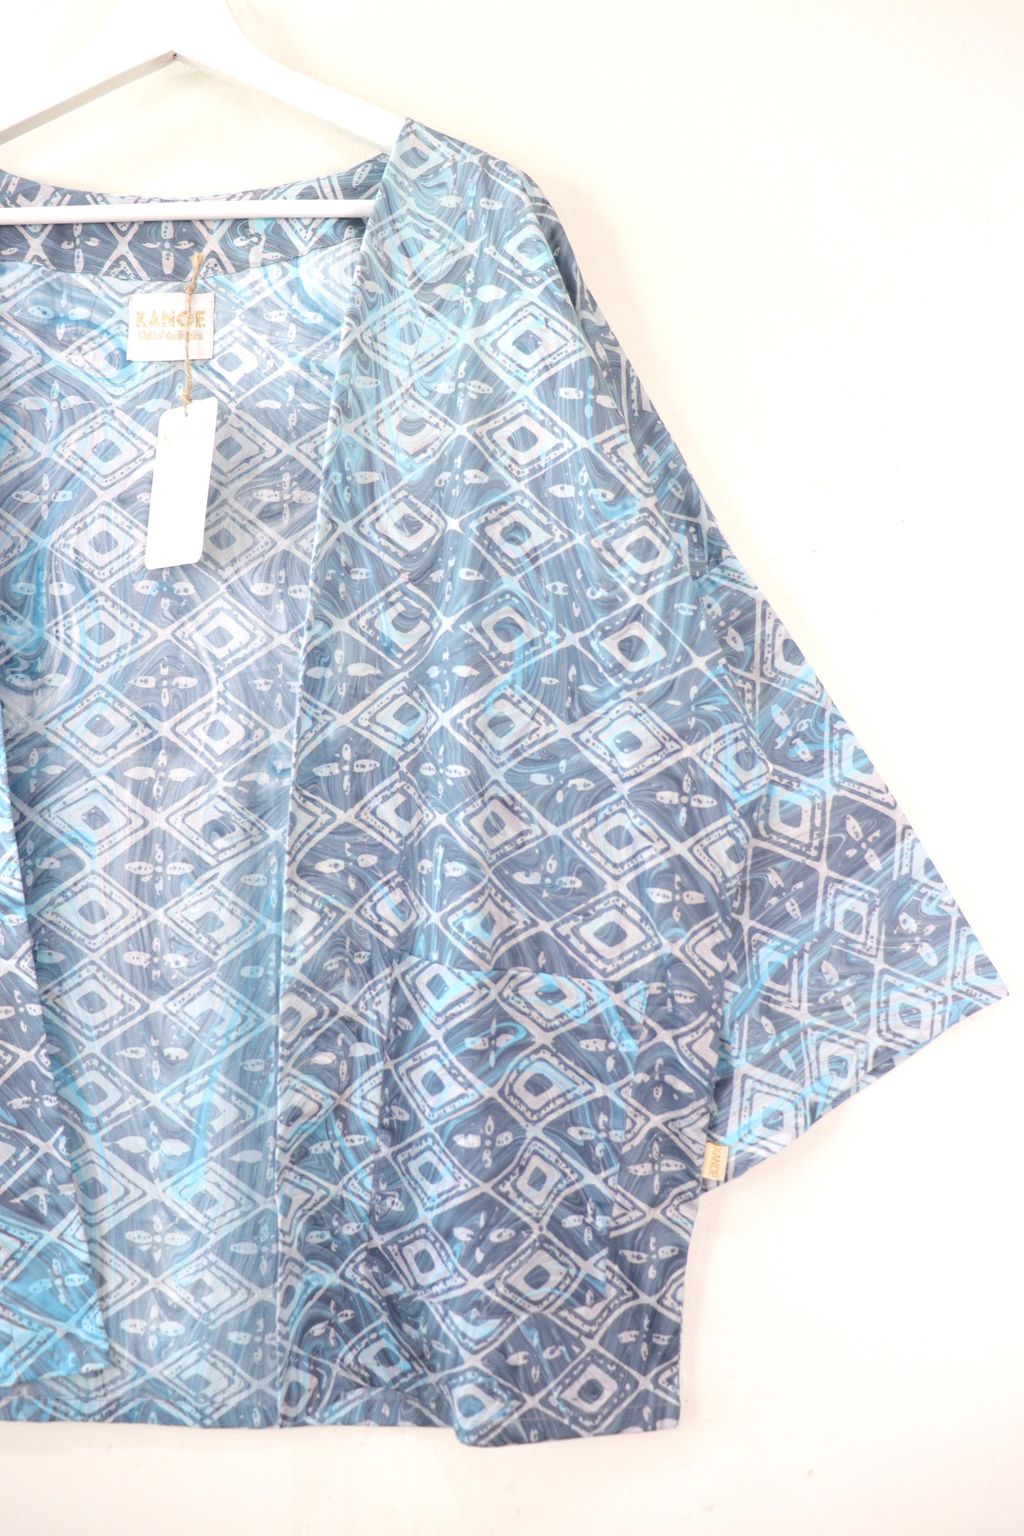 Batik-Kimono-basic-handstamped-batik-terap-6